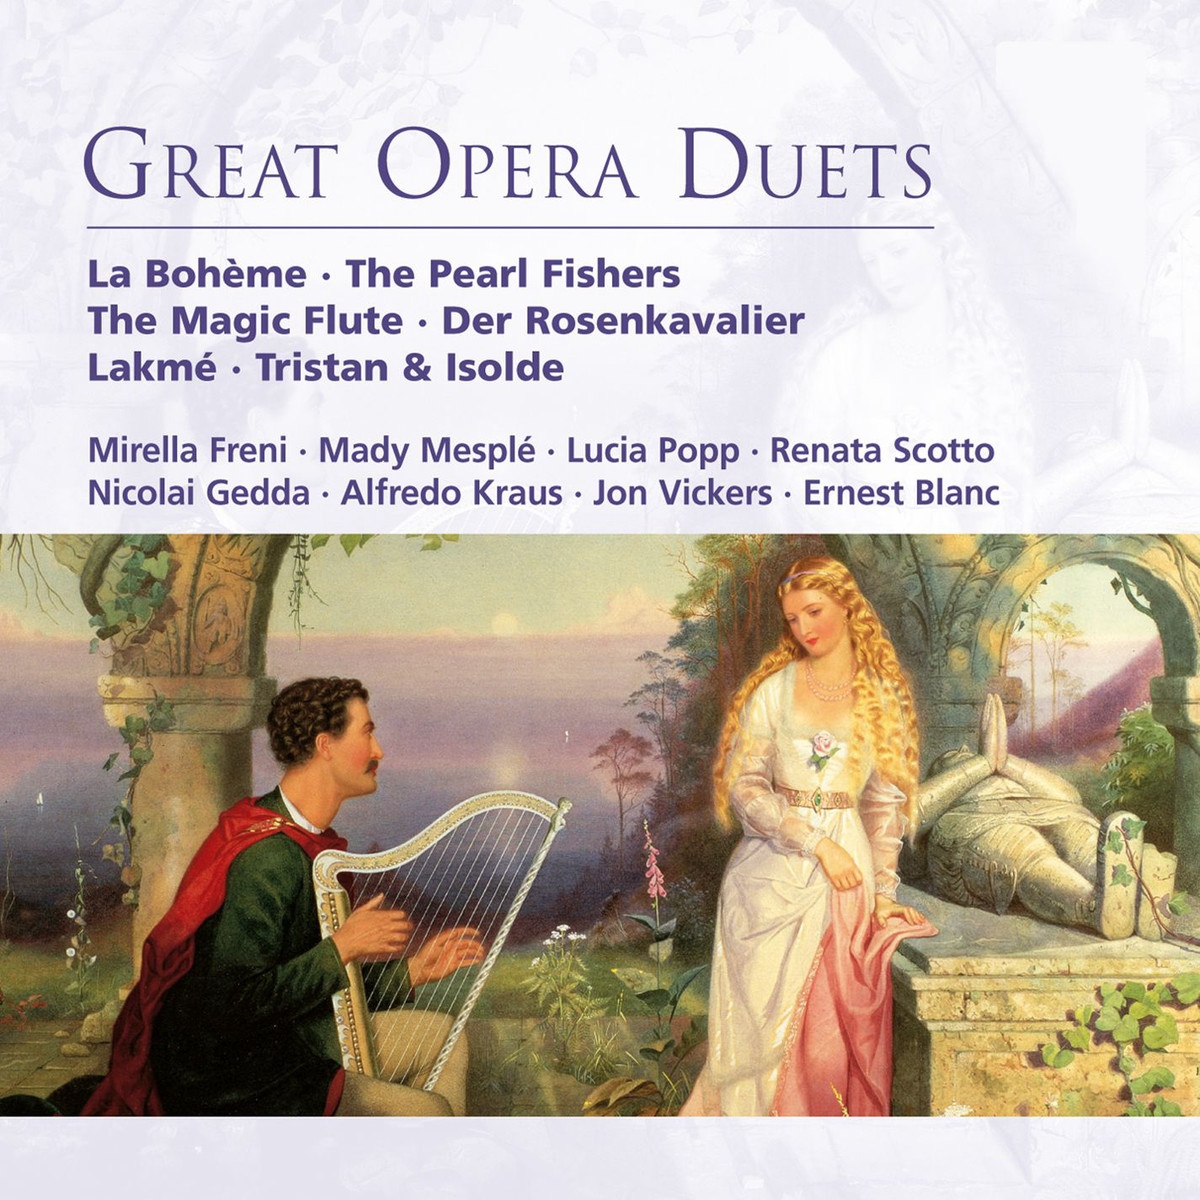 Madama Butterfly - Love Duet (Act I) (1960 Digital Remaster)